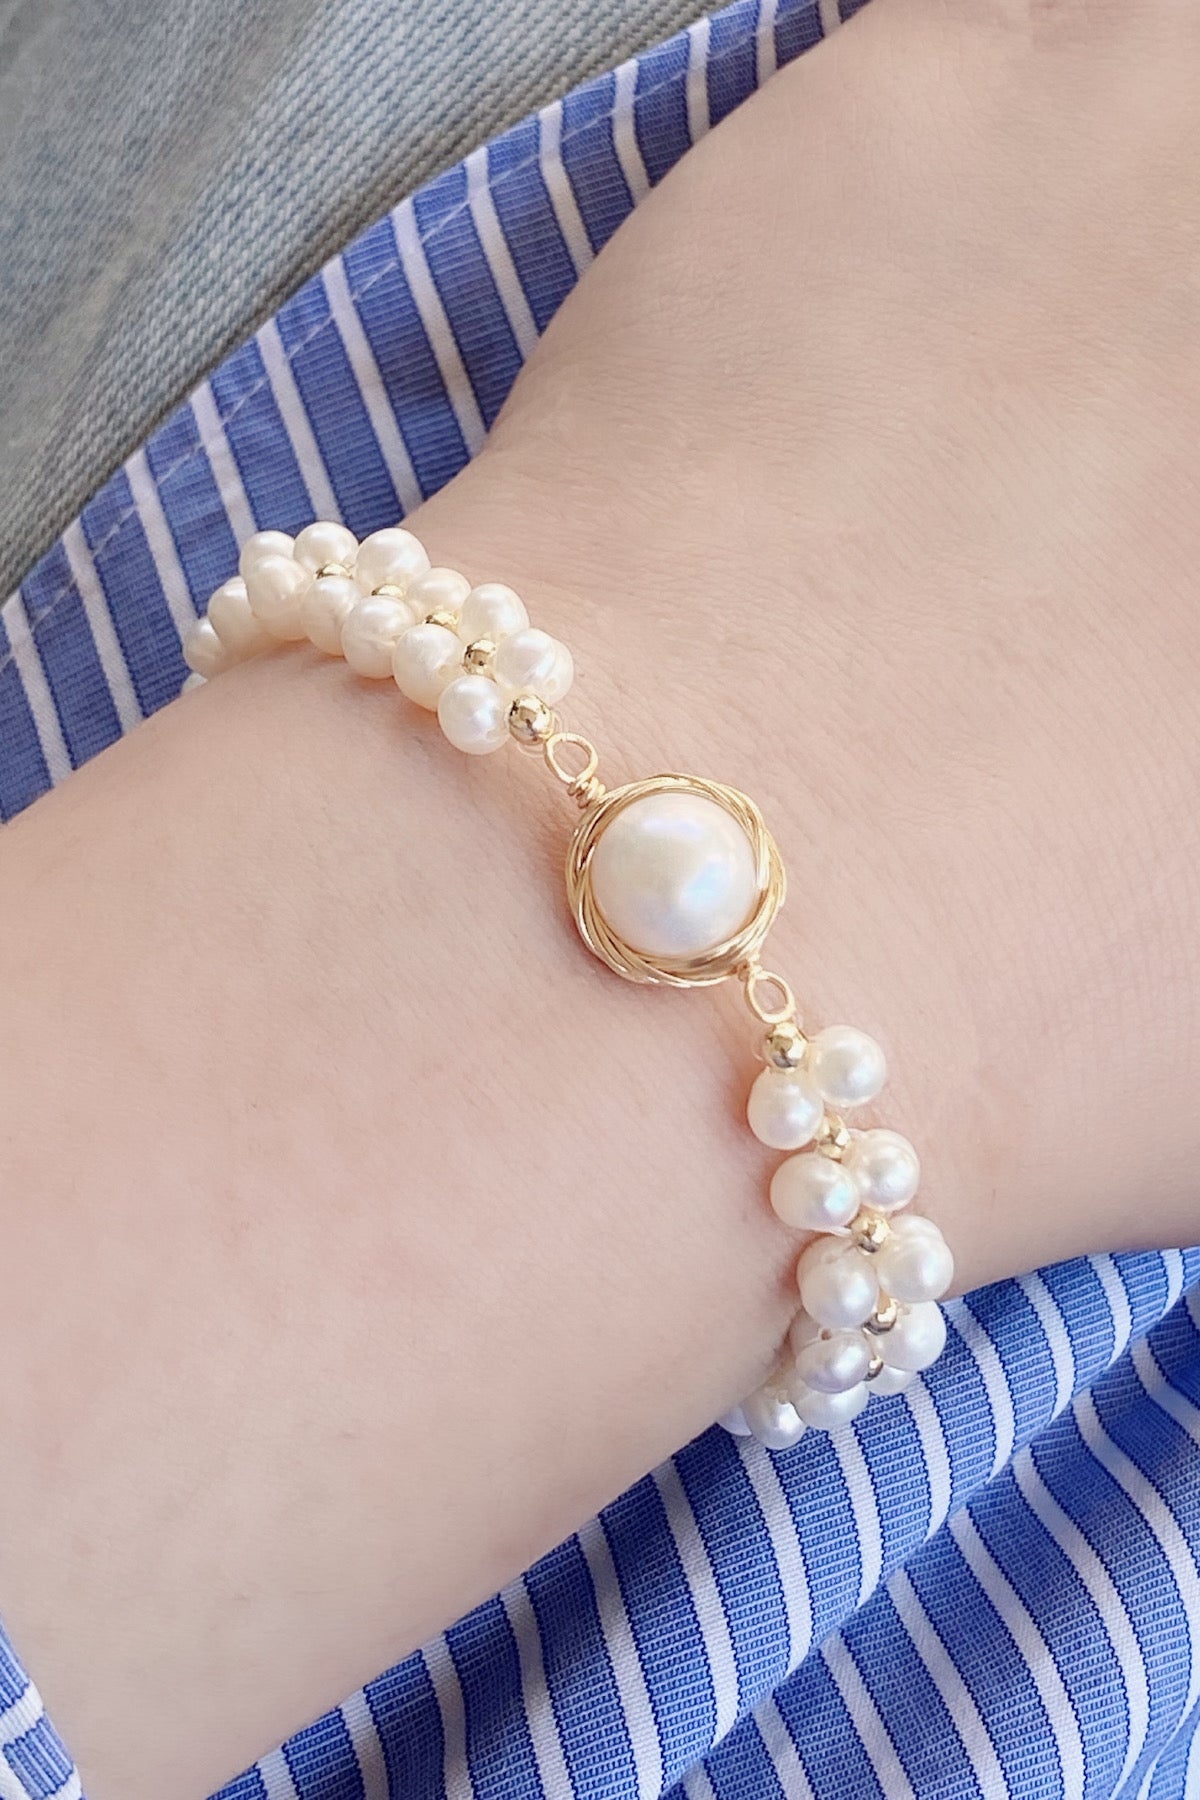 Pearl bracelet big baroque pearl as a centerpiece. Modern pearl jewelry